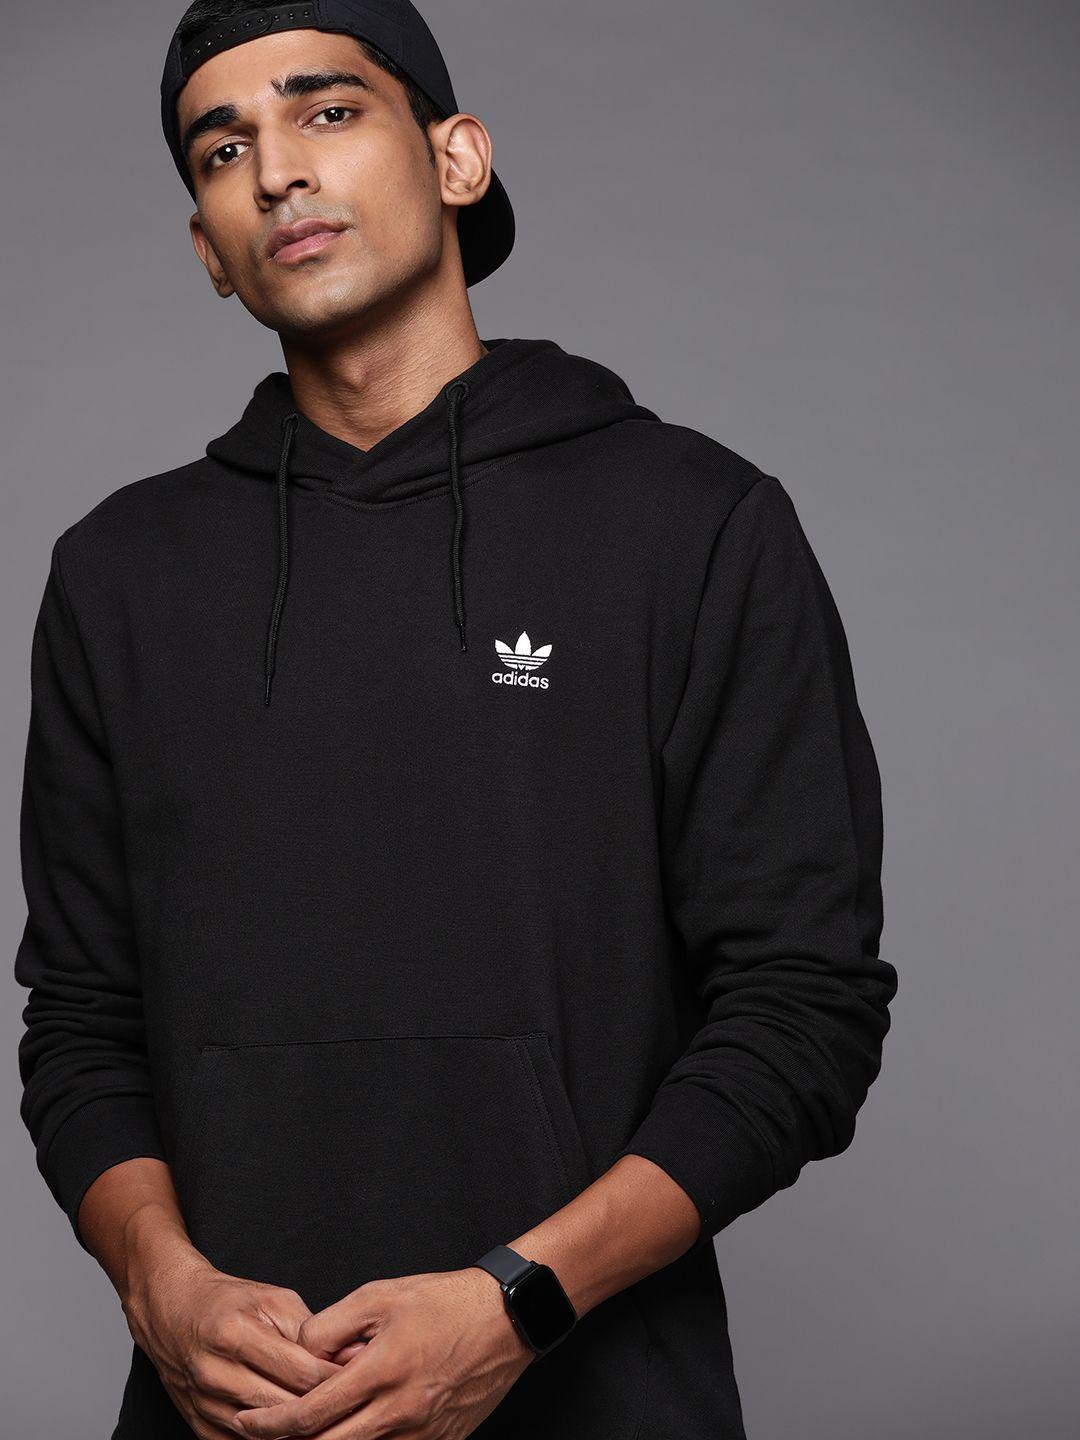 adidas-originals-men-black--pure-cotton-printed-hooded-sweatshirt